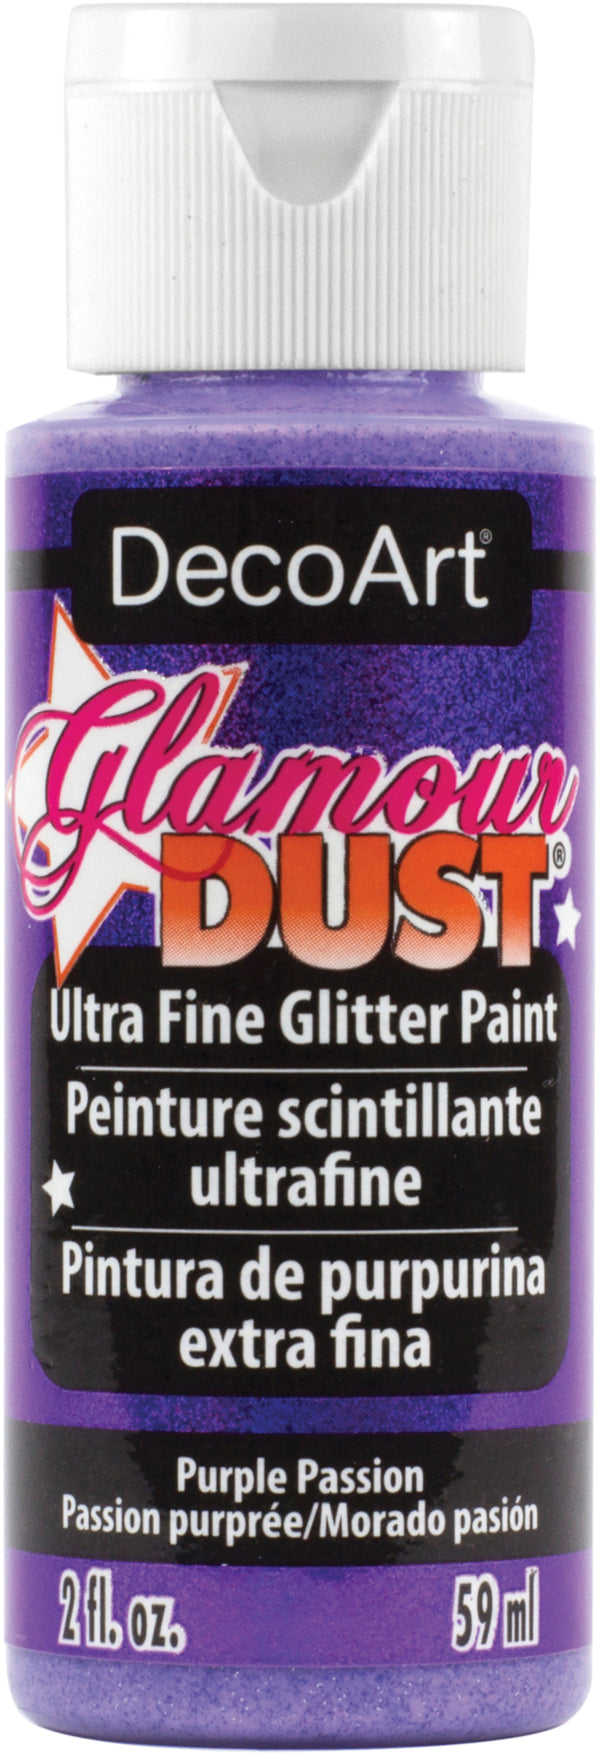 DecoArt Glamour Dust Glitter Paint 2oz - Purple Passion